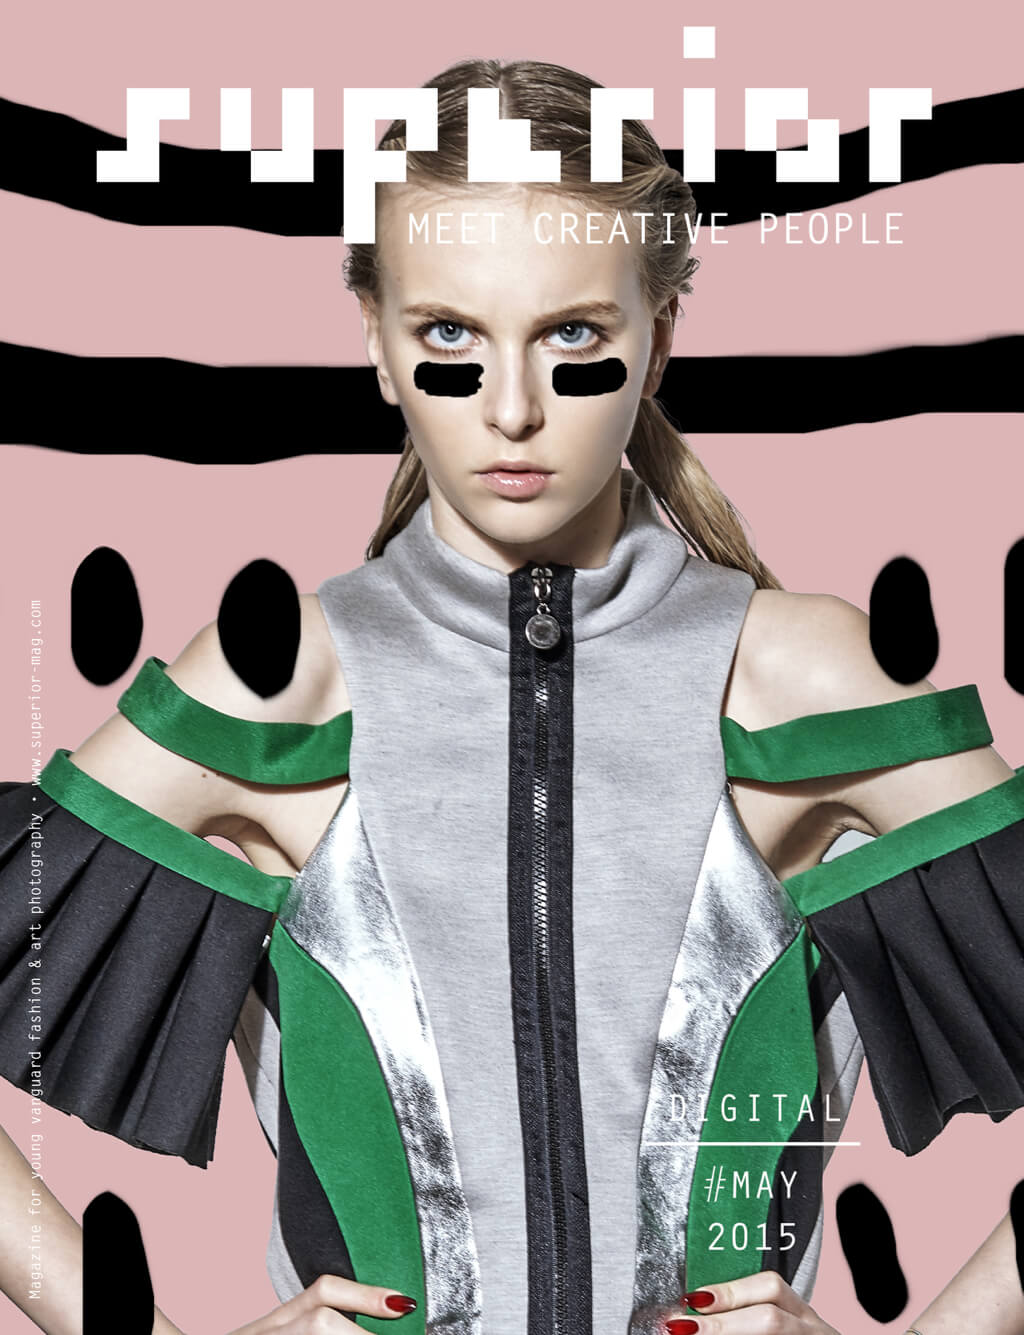 Superior Magazine # May 2015 - Cover by Guido Martirani